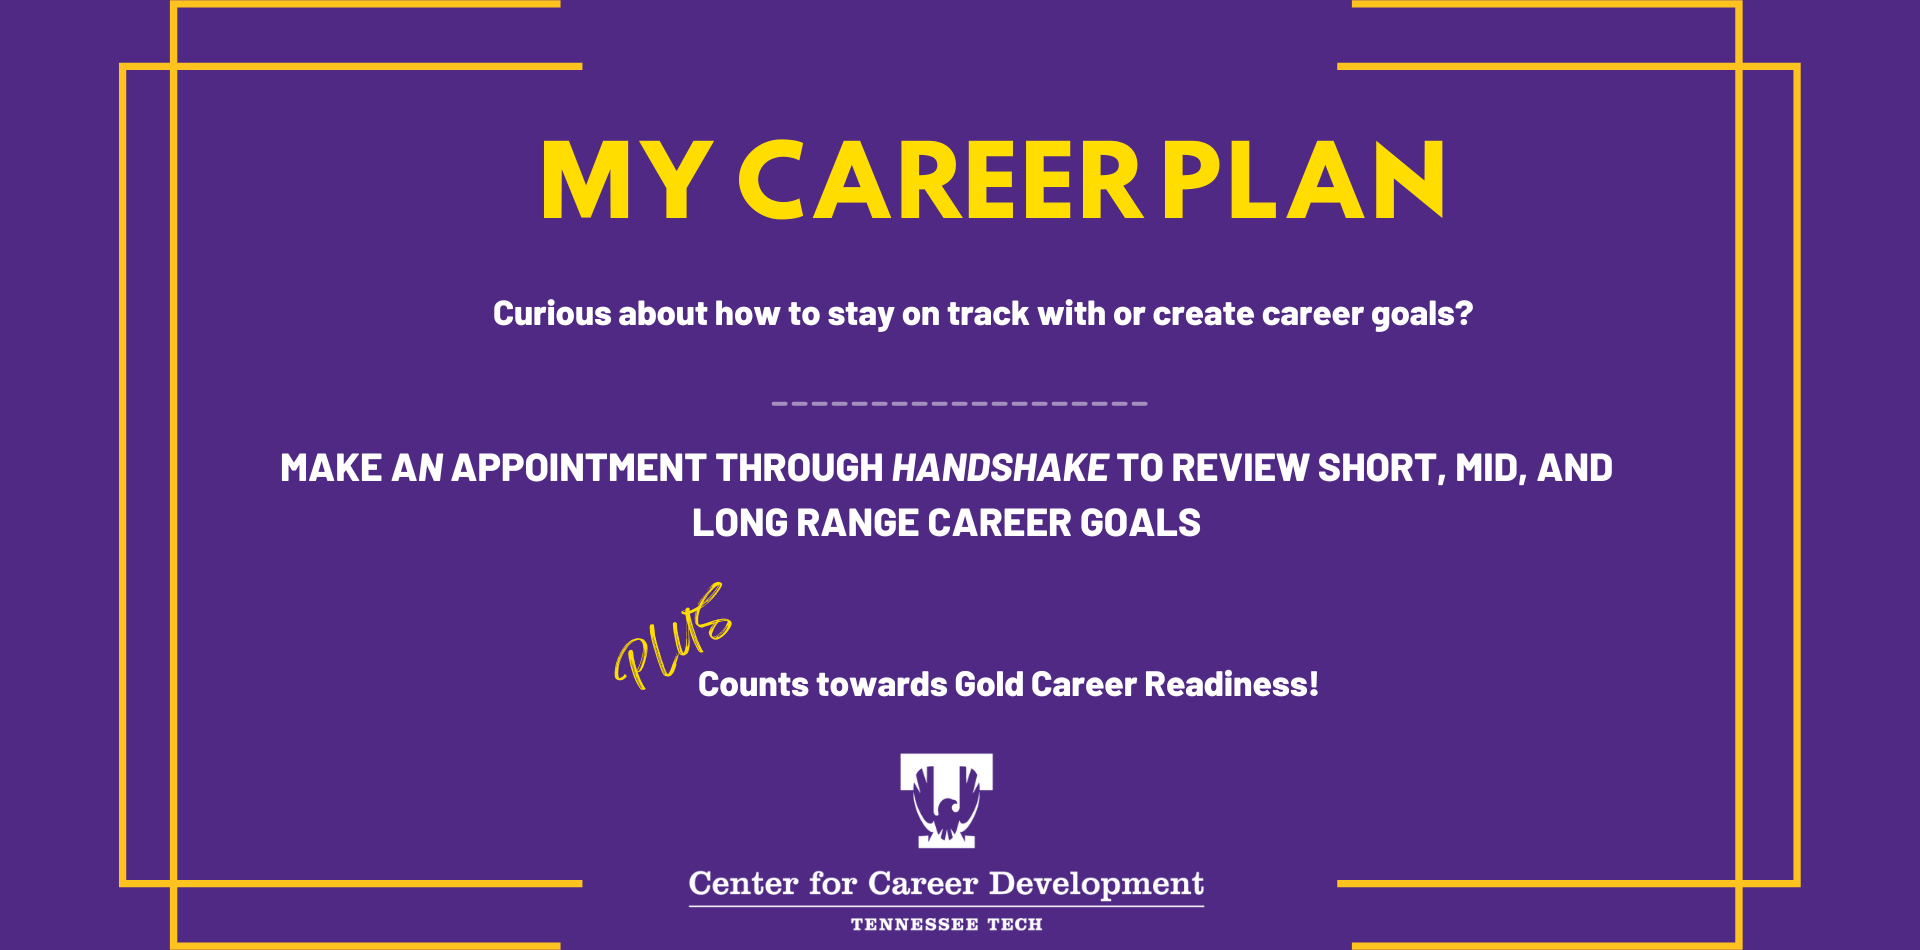 My Career Plan - Make an appt through handshake to review career goals